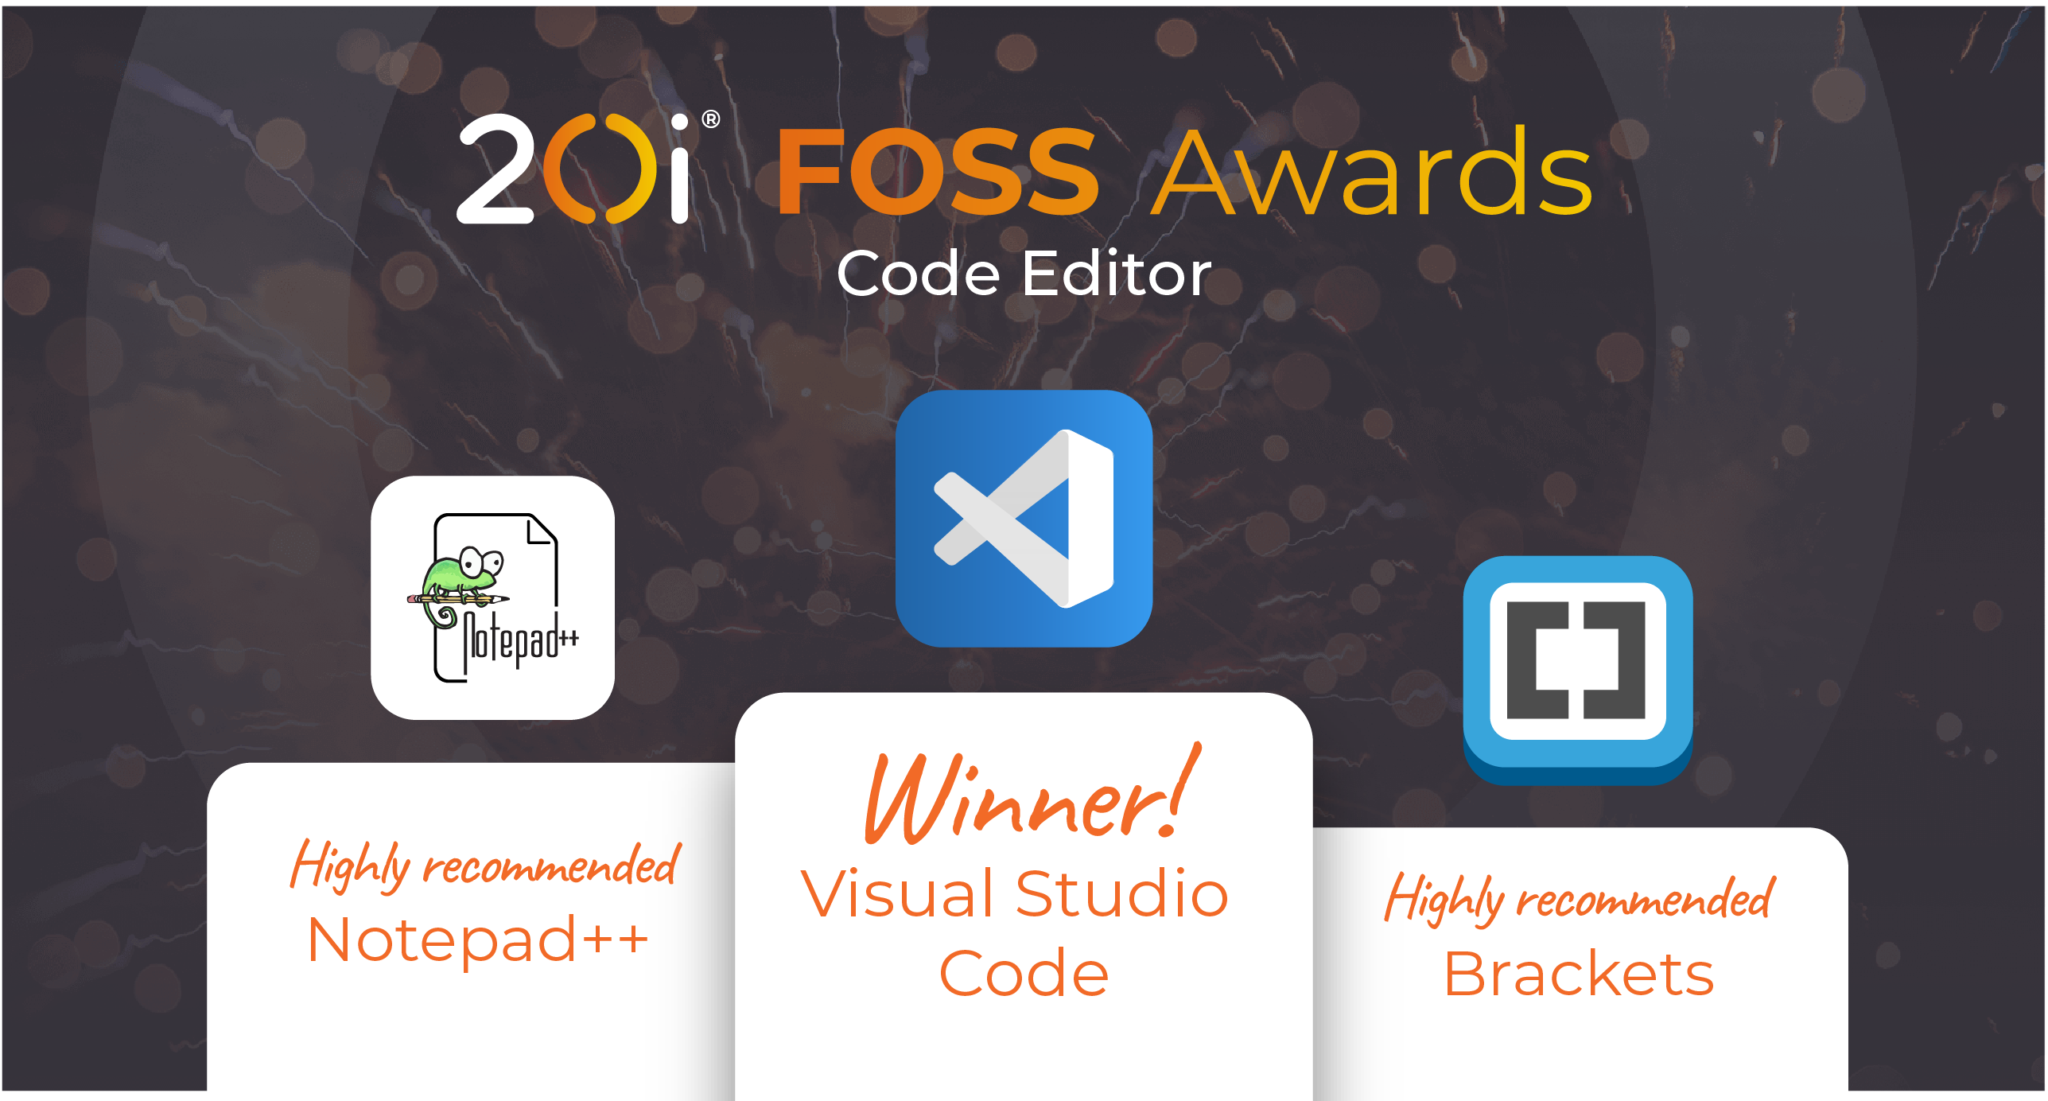 20i foss awards winners 2023 - code editor category